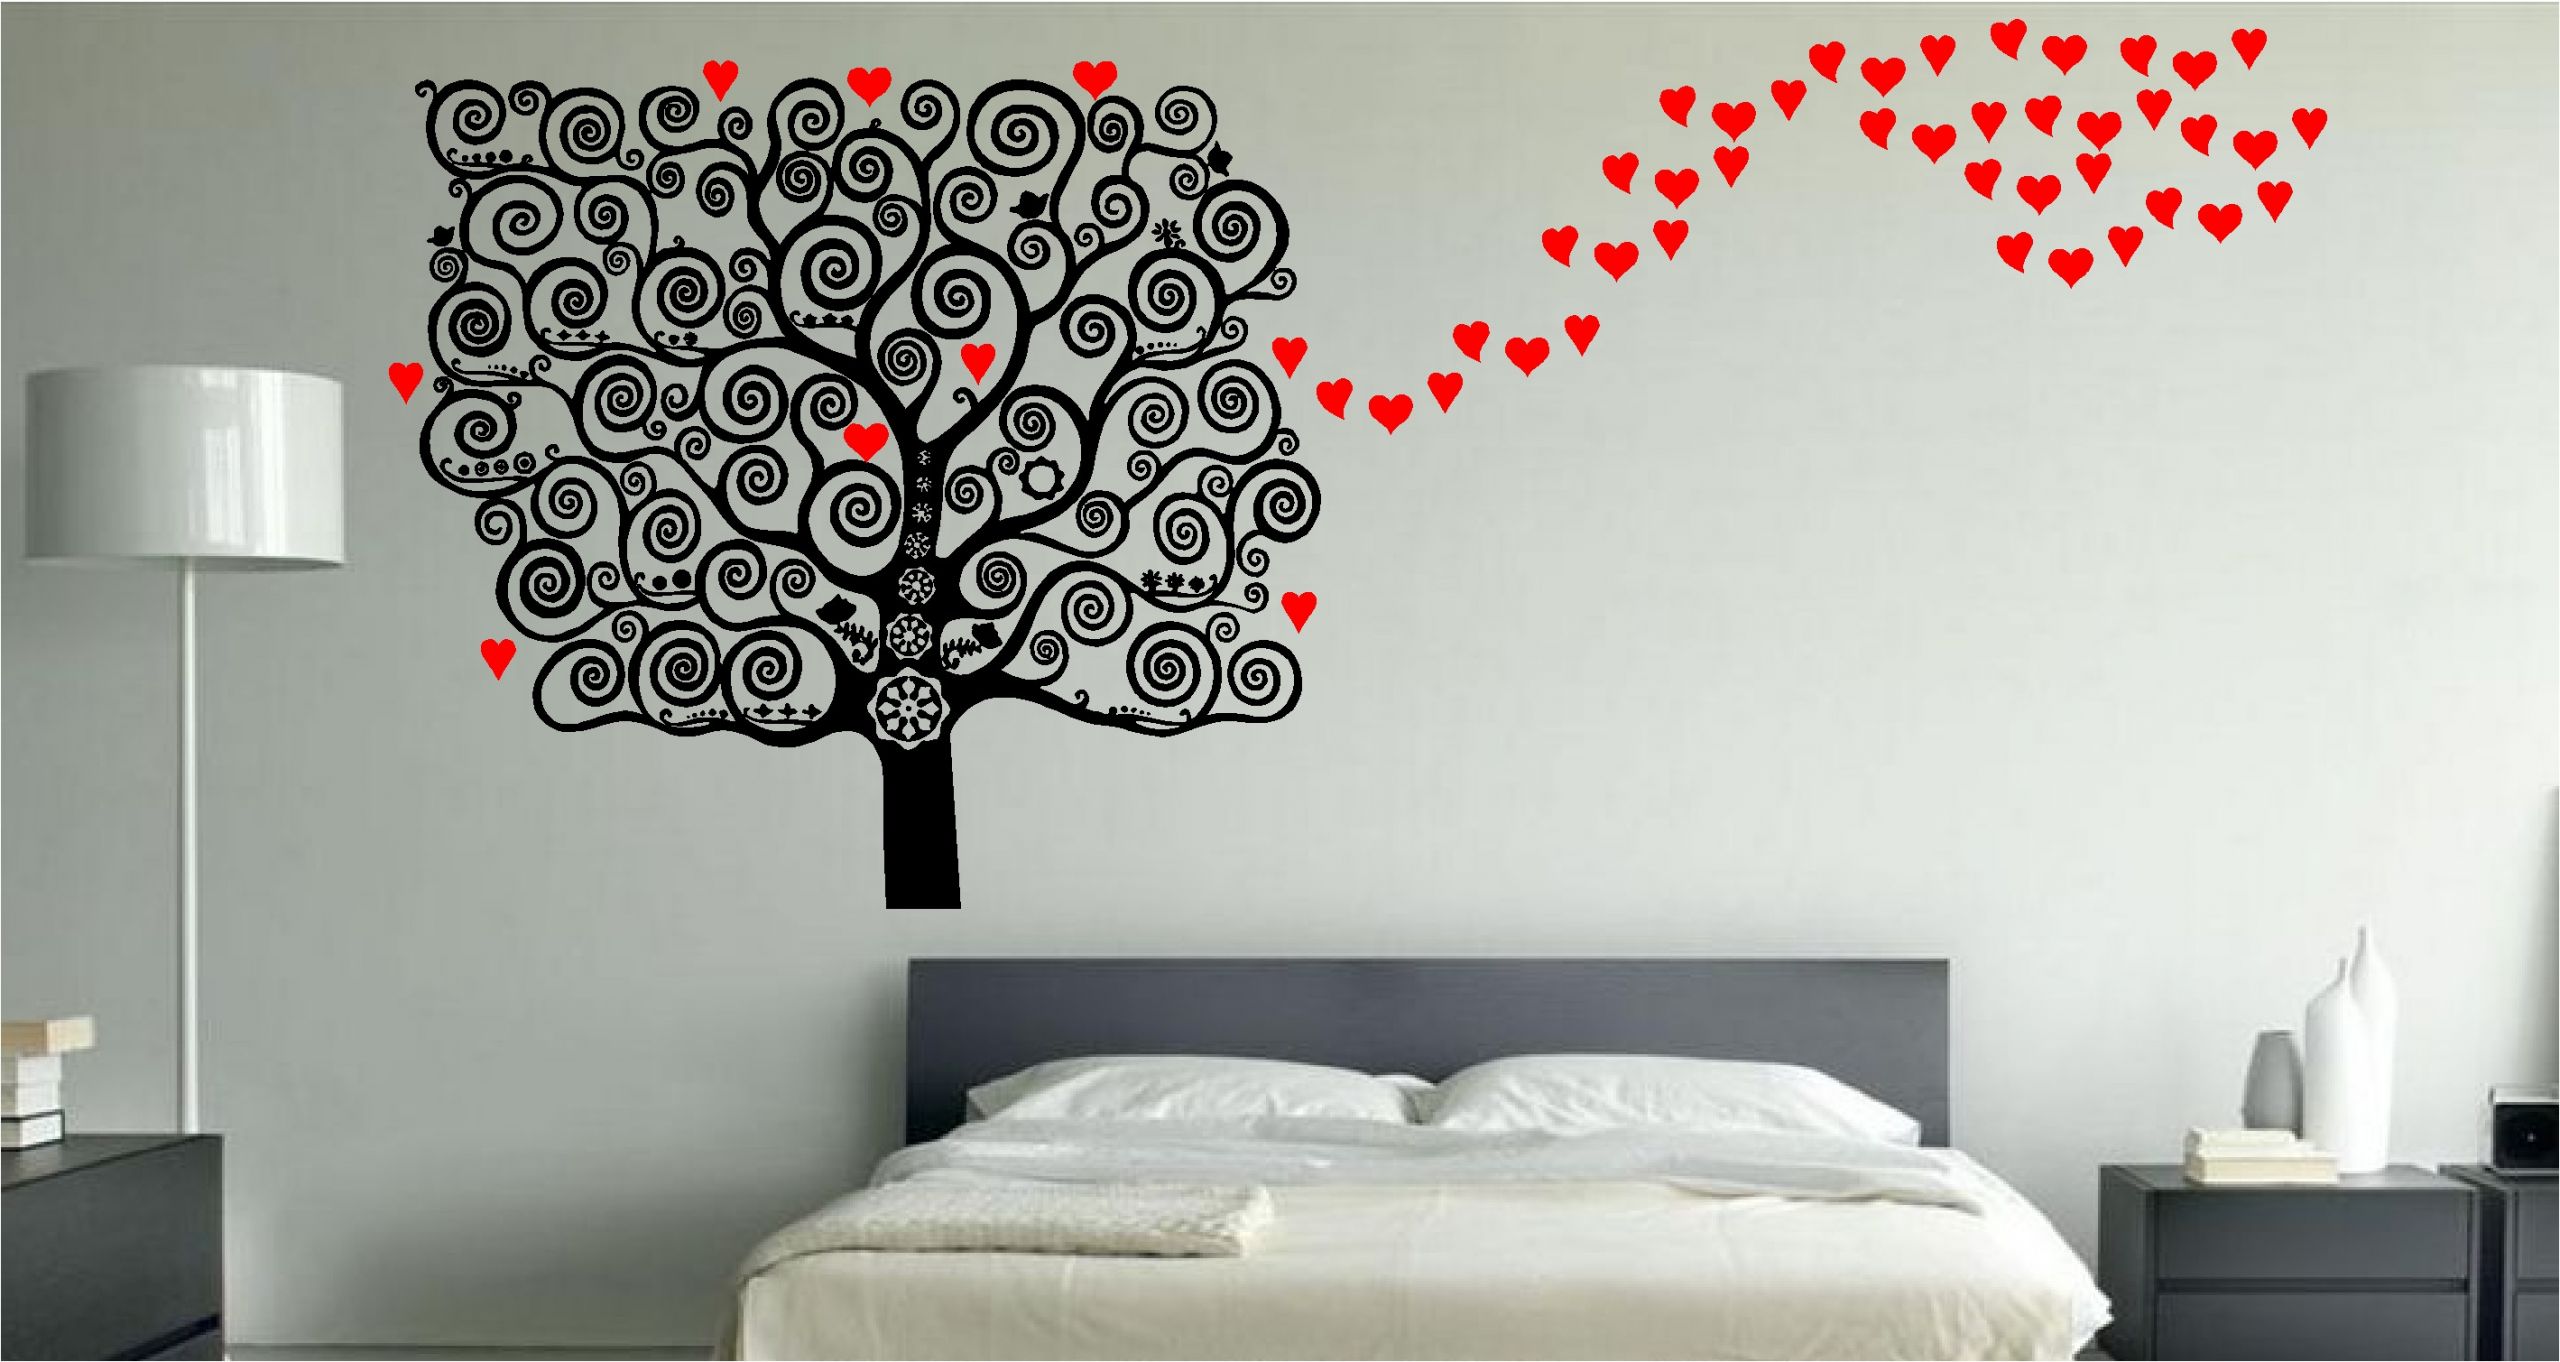 Bedroom Wall Art Stickers
 STUNNING LOVE HEART TREE wall art sticker decal BEDROOM